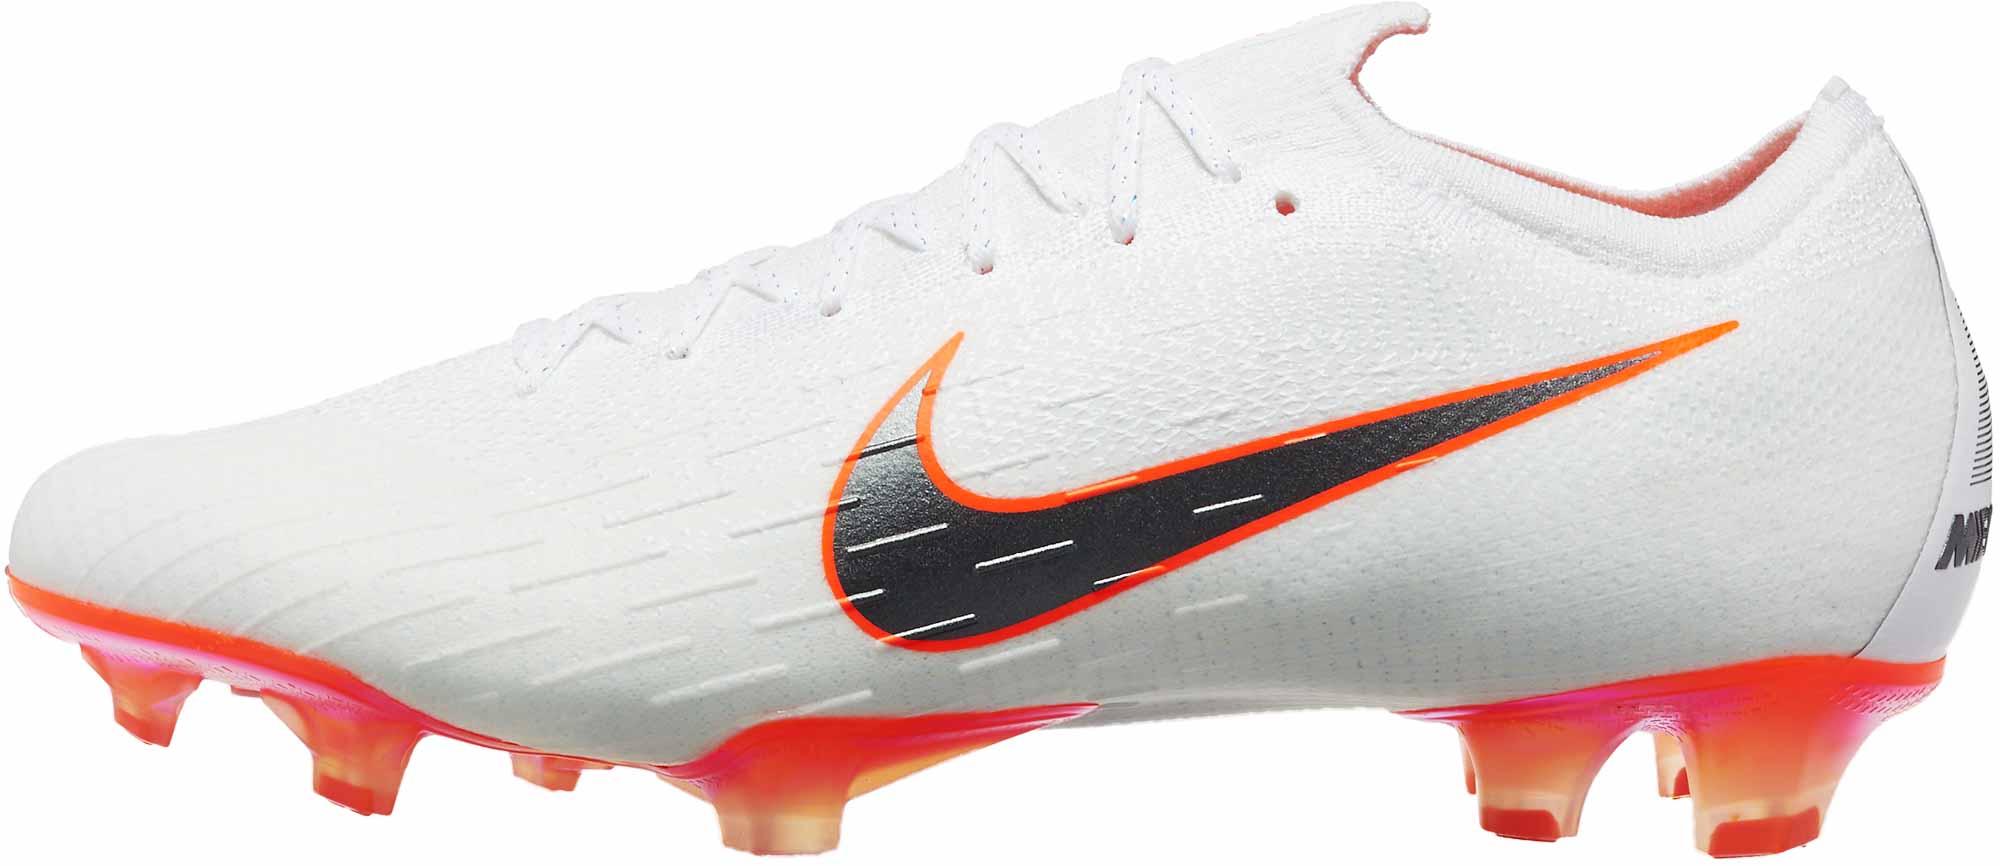 Cheap Nike Soccer Shoes Nike Vapor XII Club Neymar TF